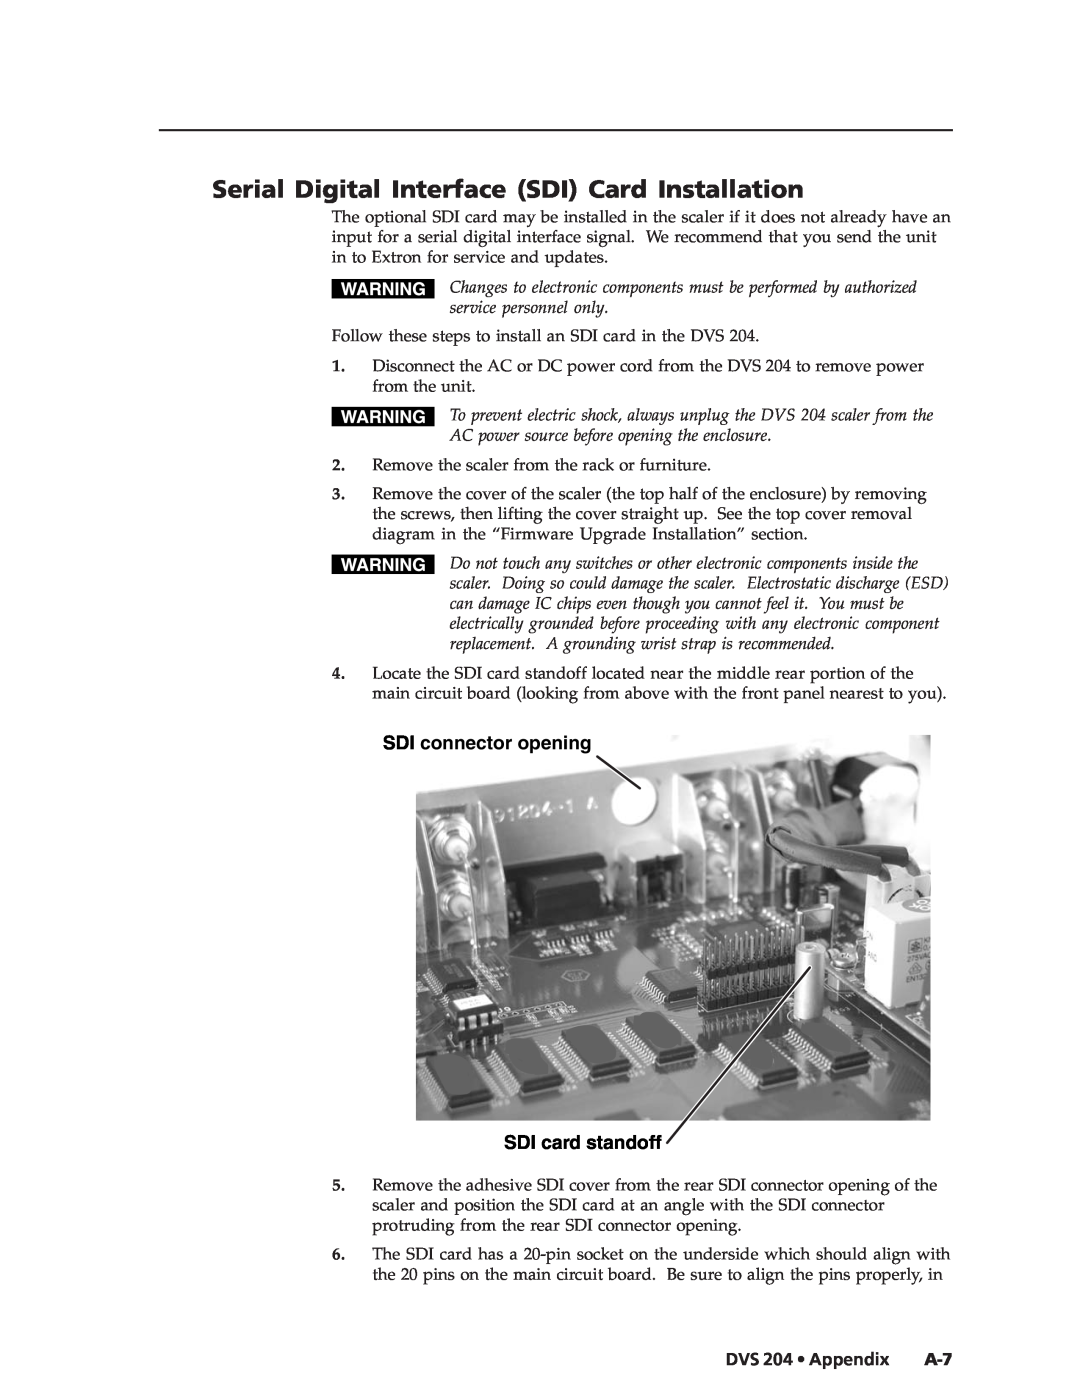 Extron electronic DVS 204 manual Serial Digital Interface SDI Card Installation, SDI connector opening SDI card standoff 